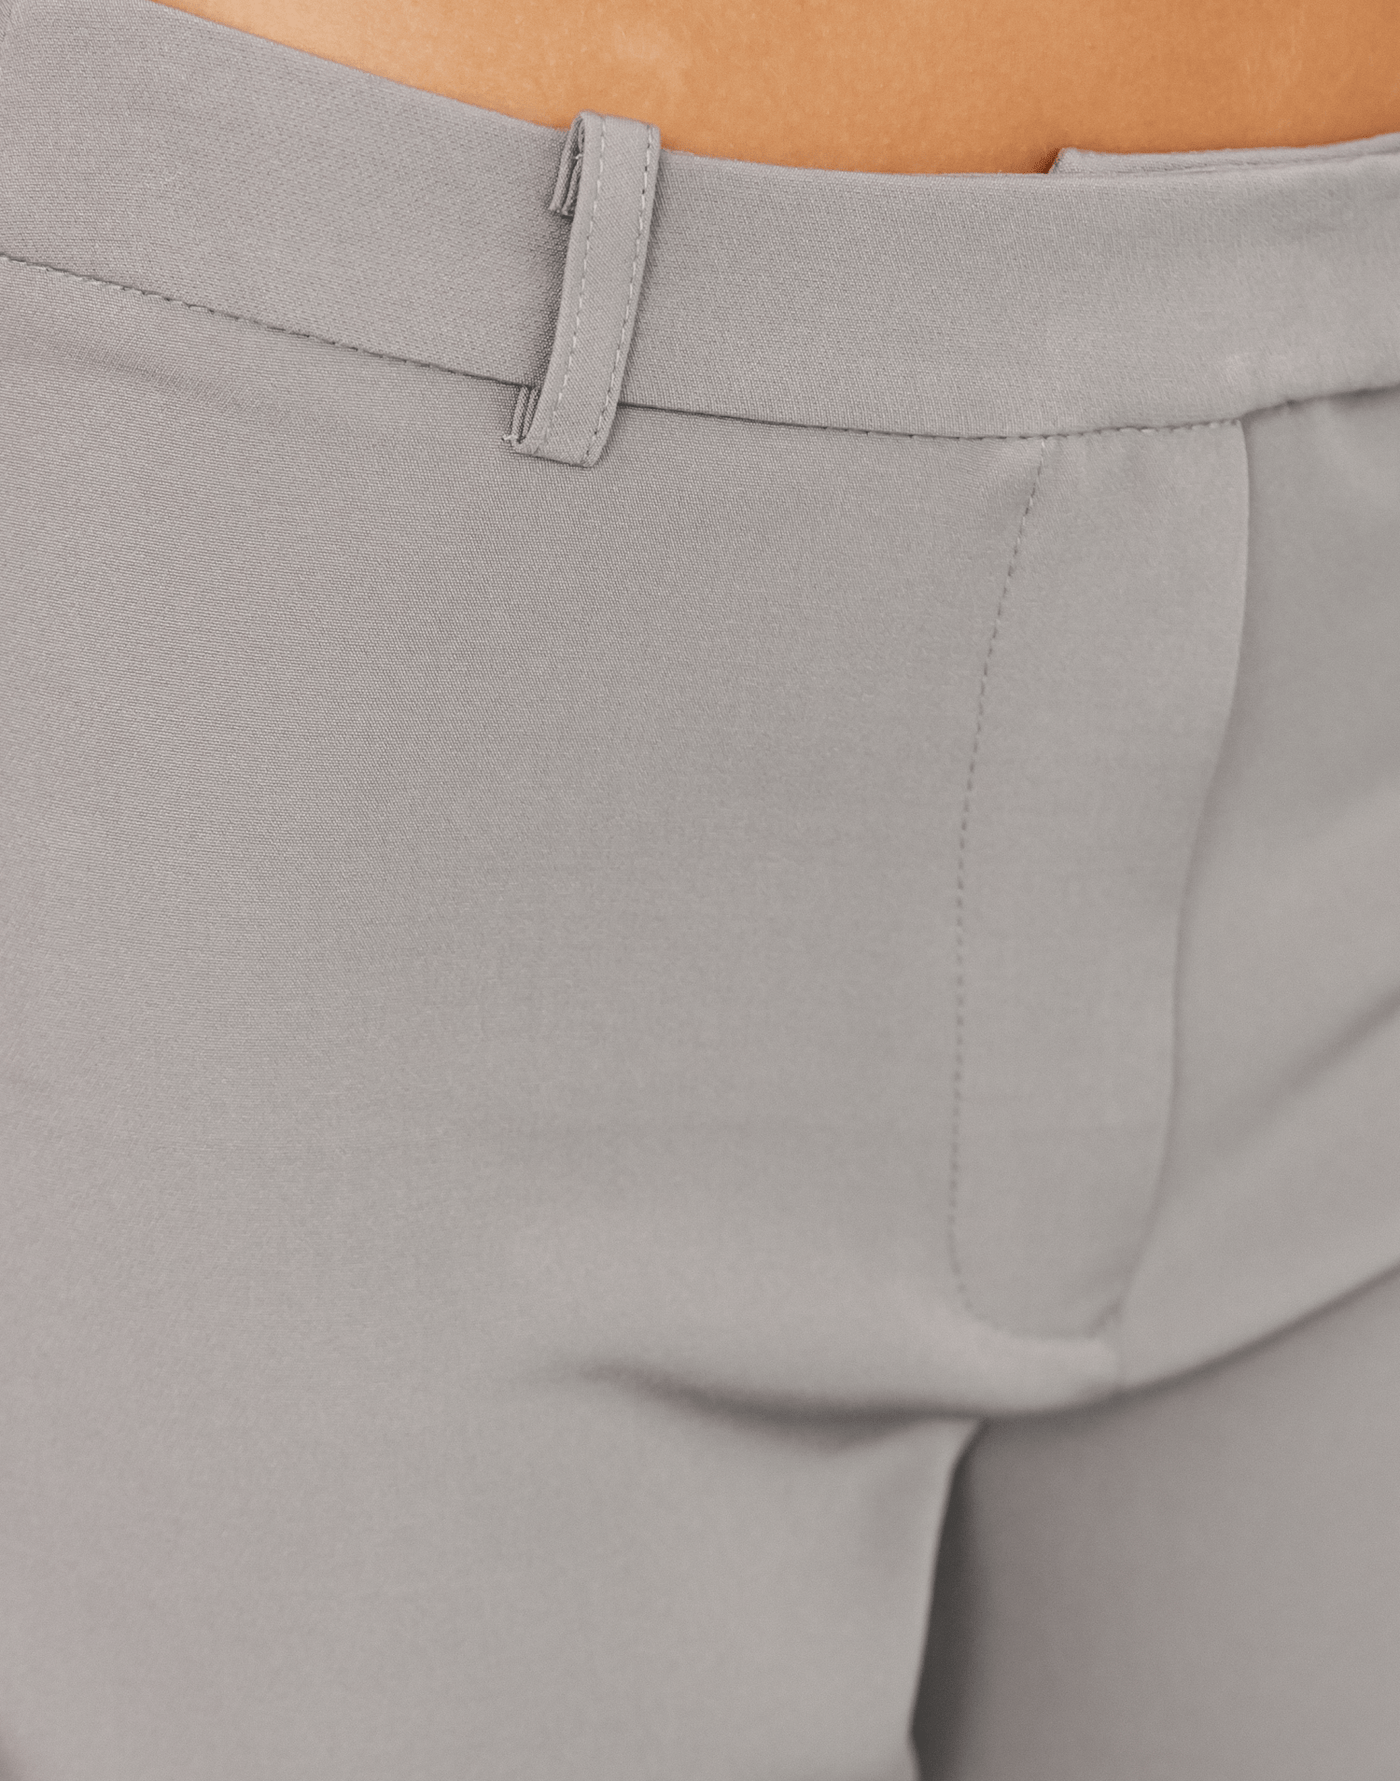 Xali Pants (Charcoal) - Mid Waisted Pants - Women's Pants - Charcoal Clothing